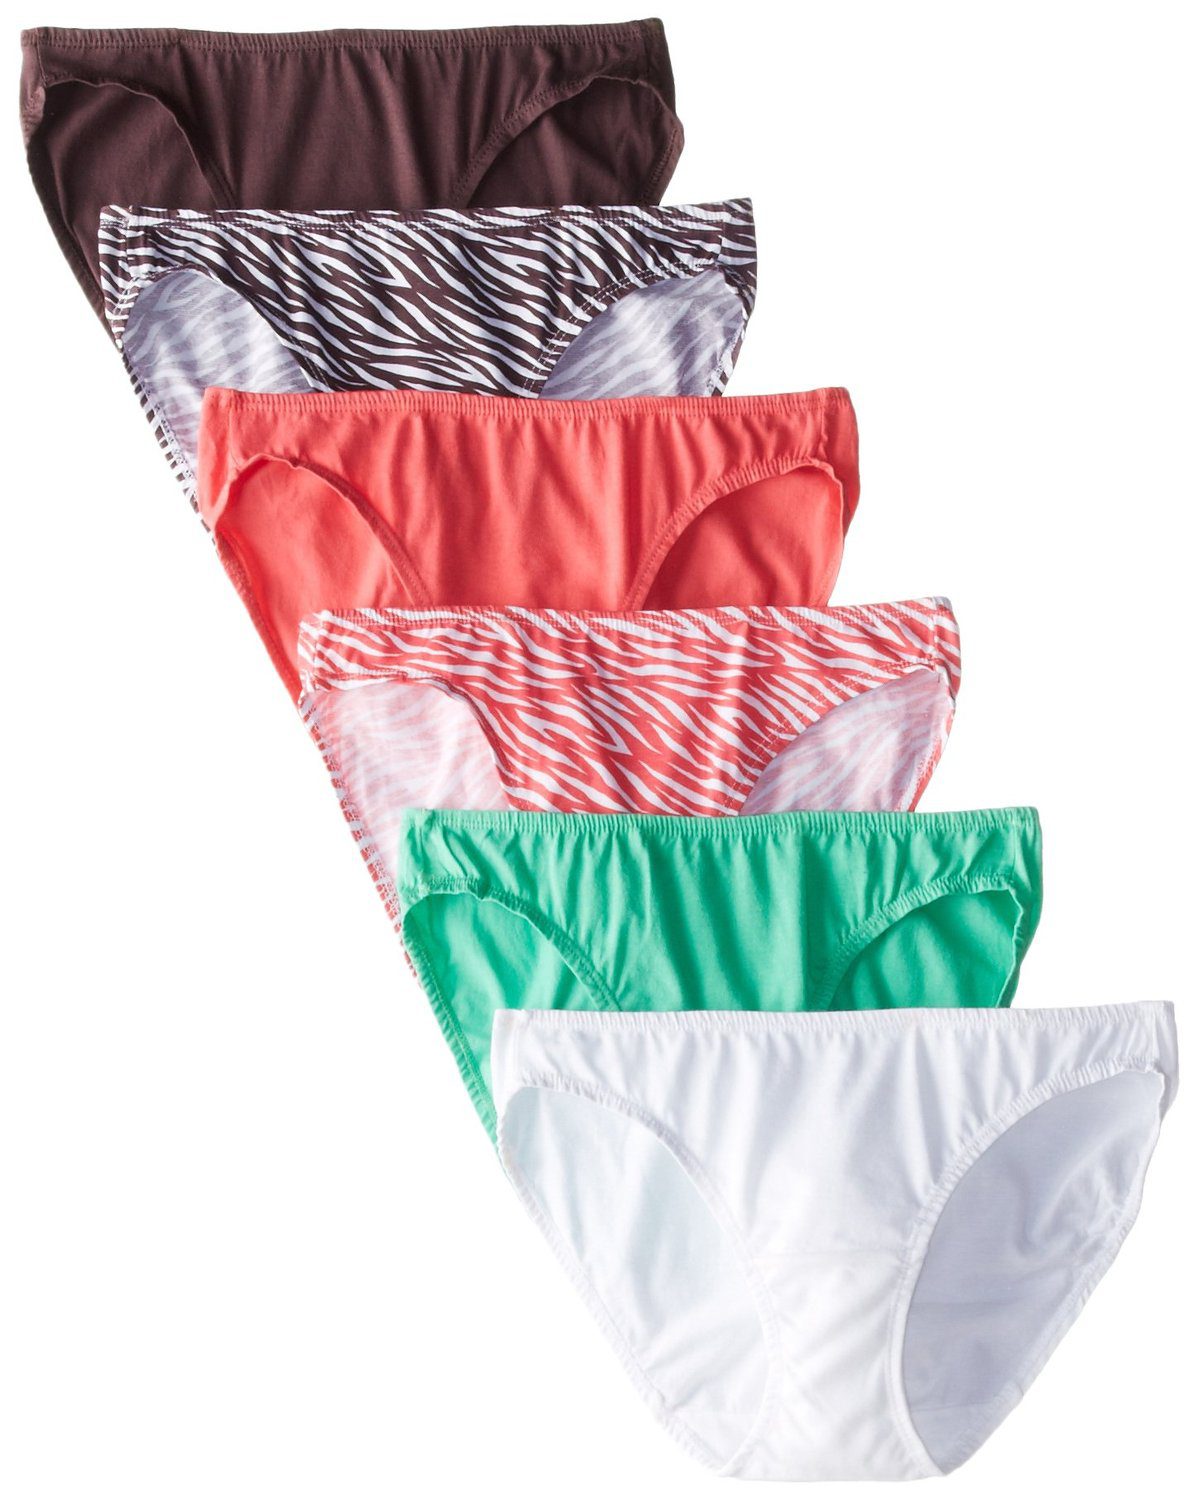 Women's Cotton Stretch Bikini Panty, Assorted 6 Pack